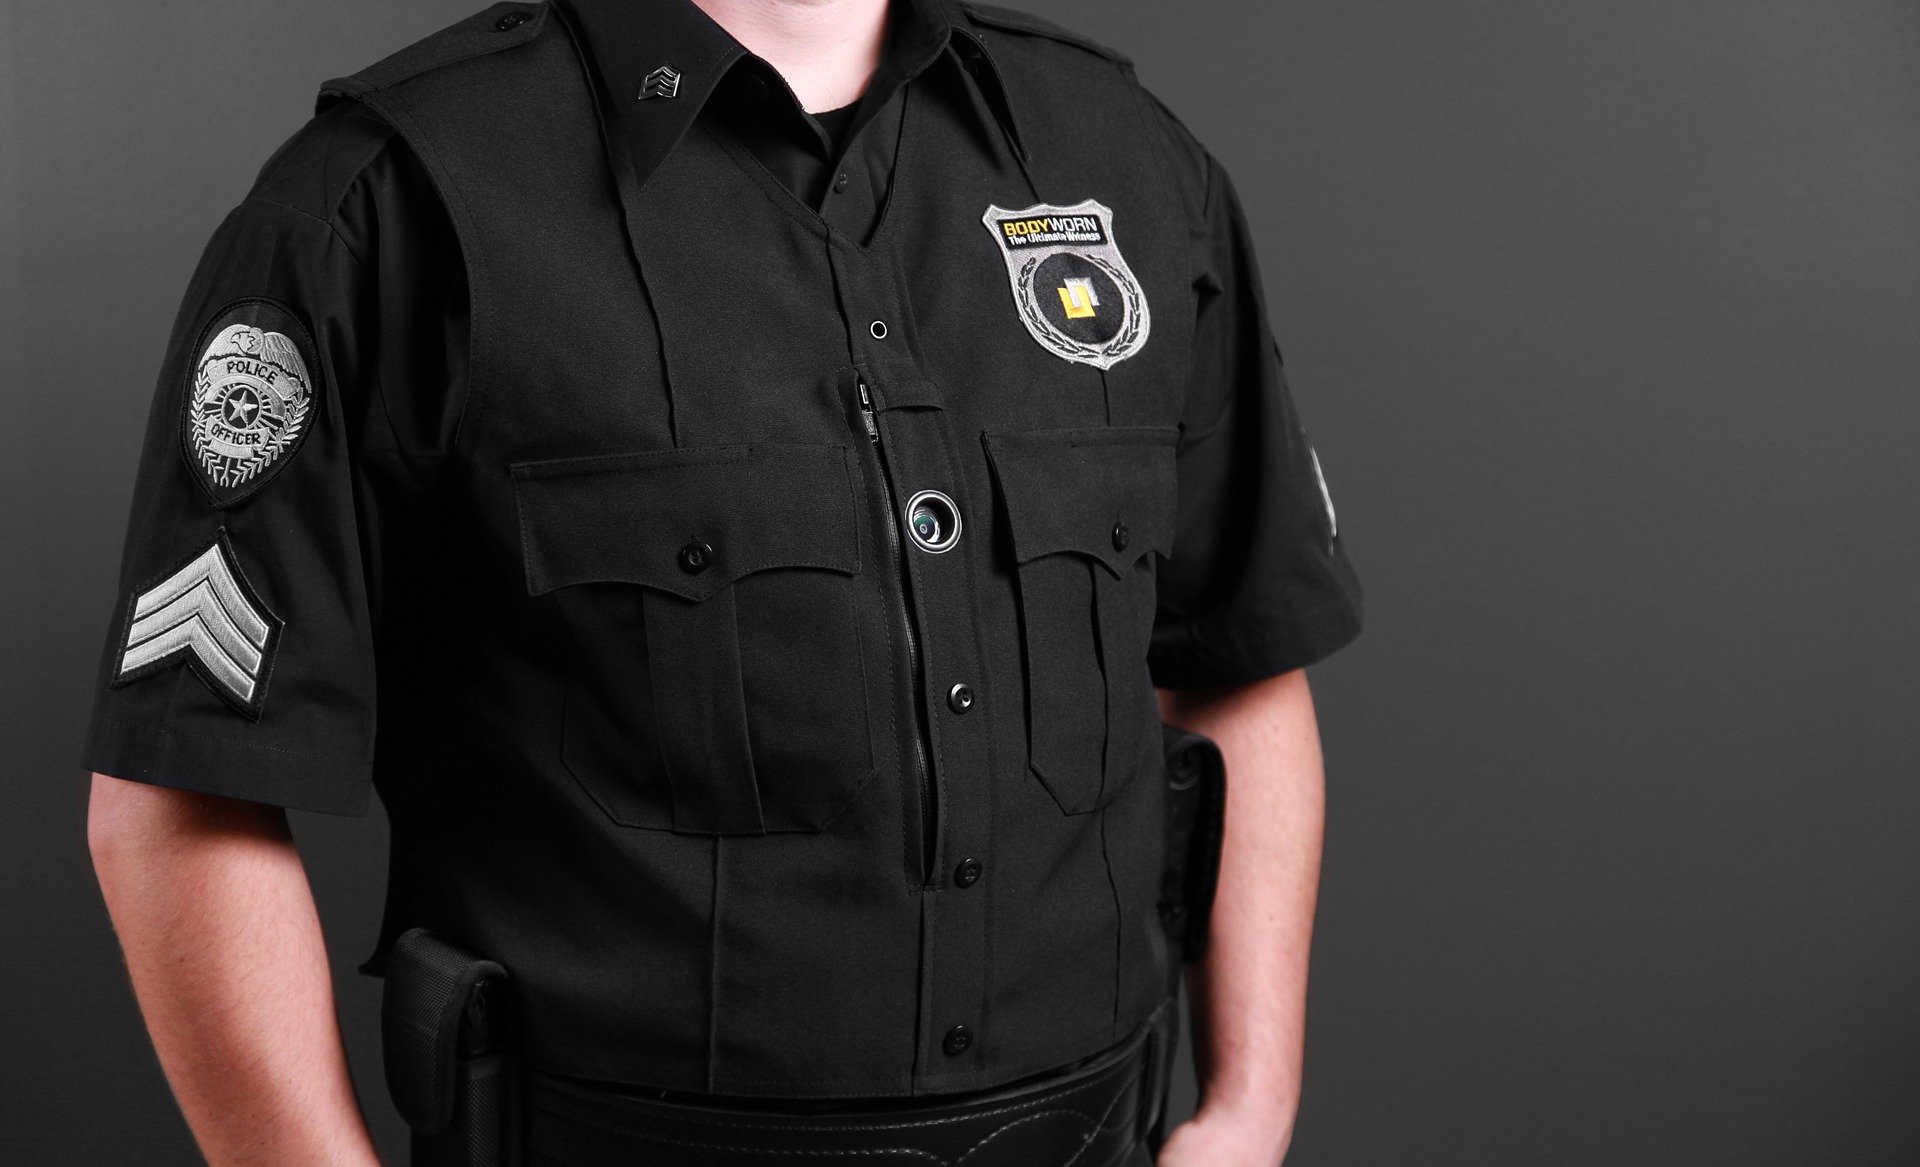 Police body camera | Source: Pixabay